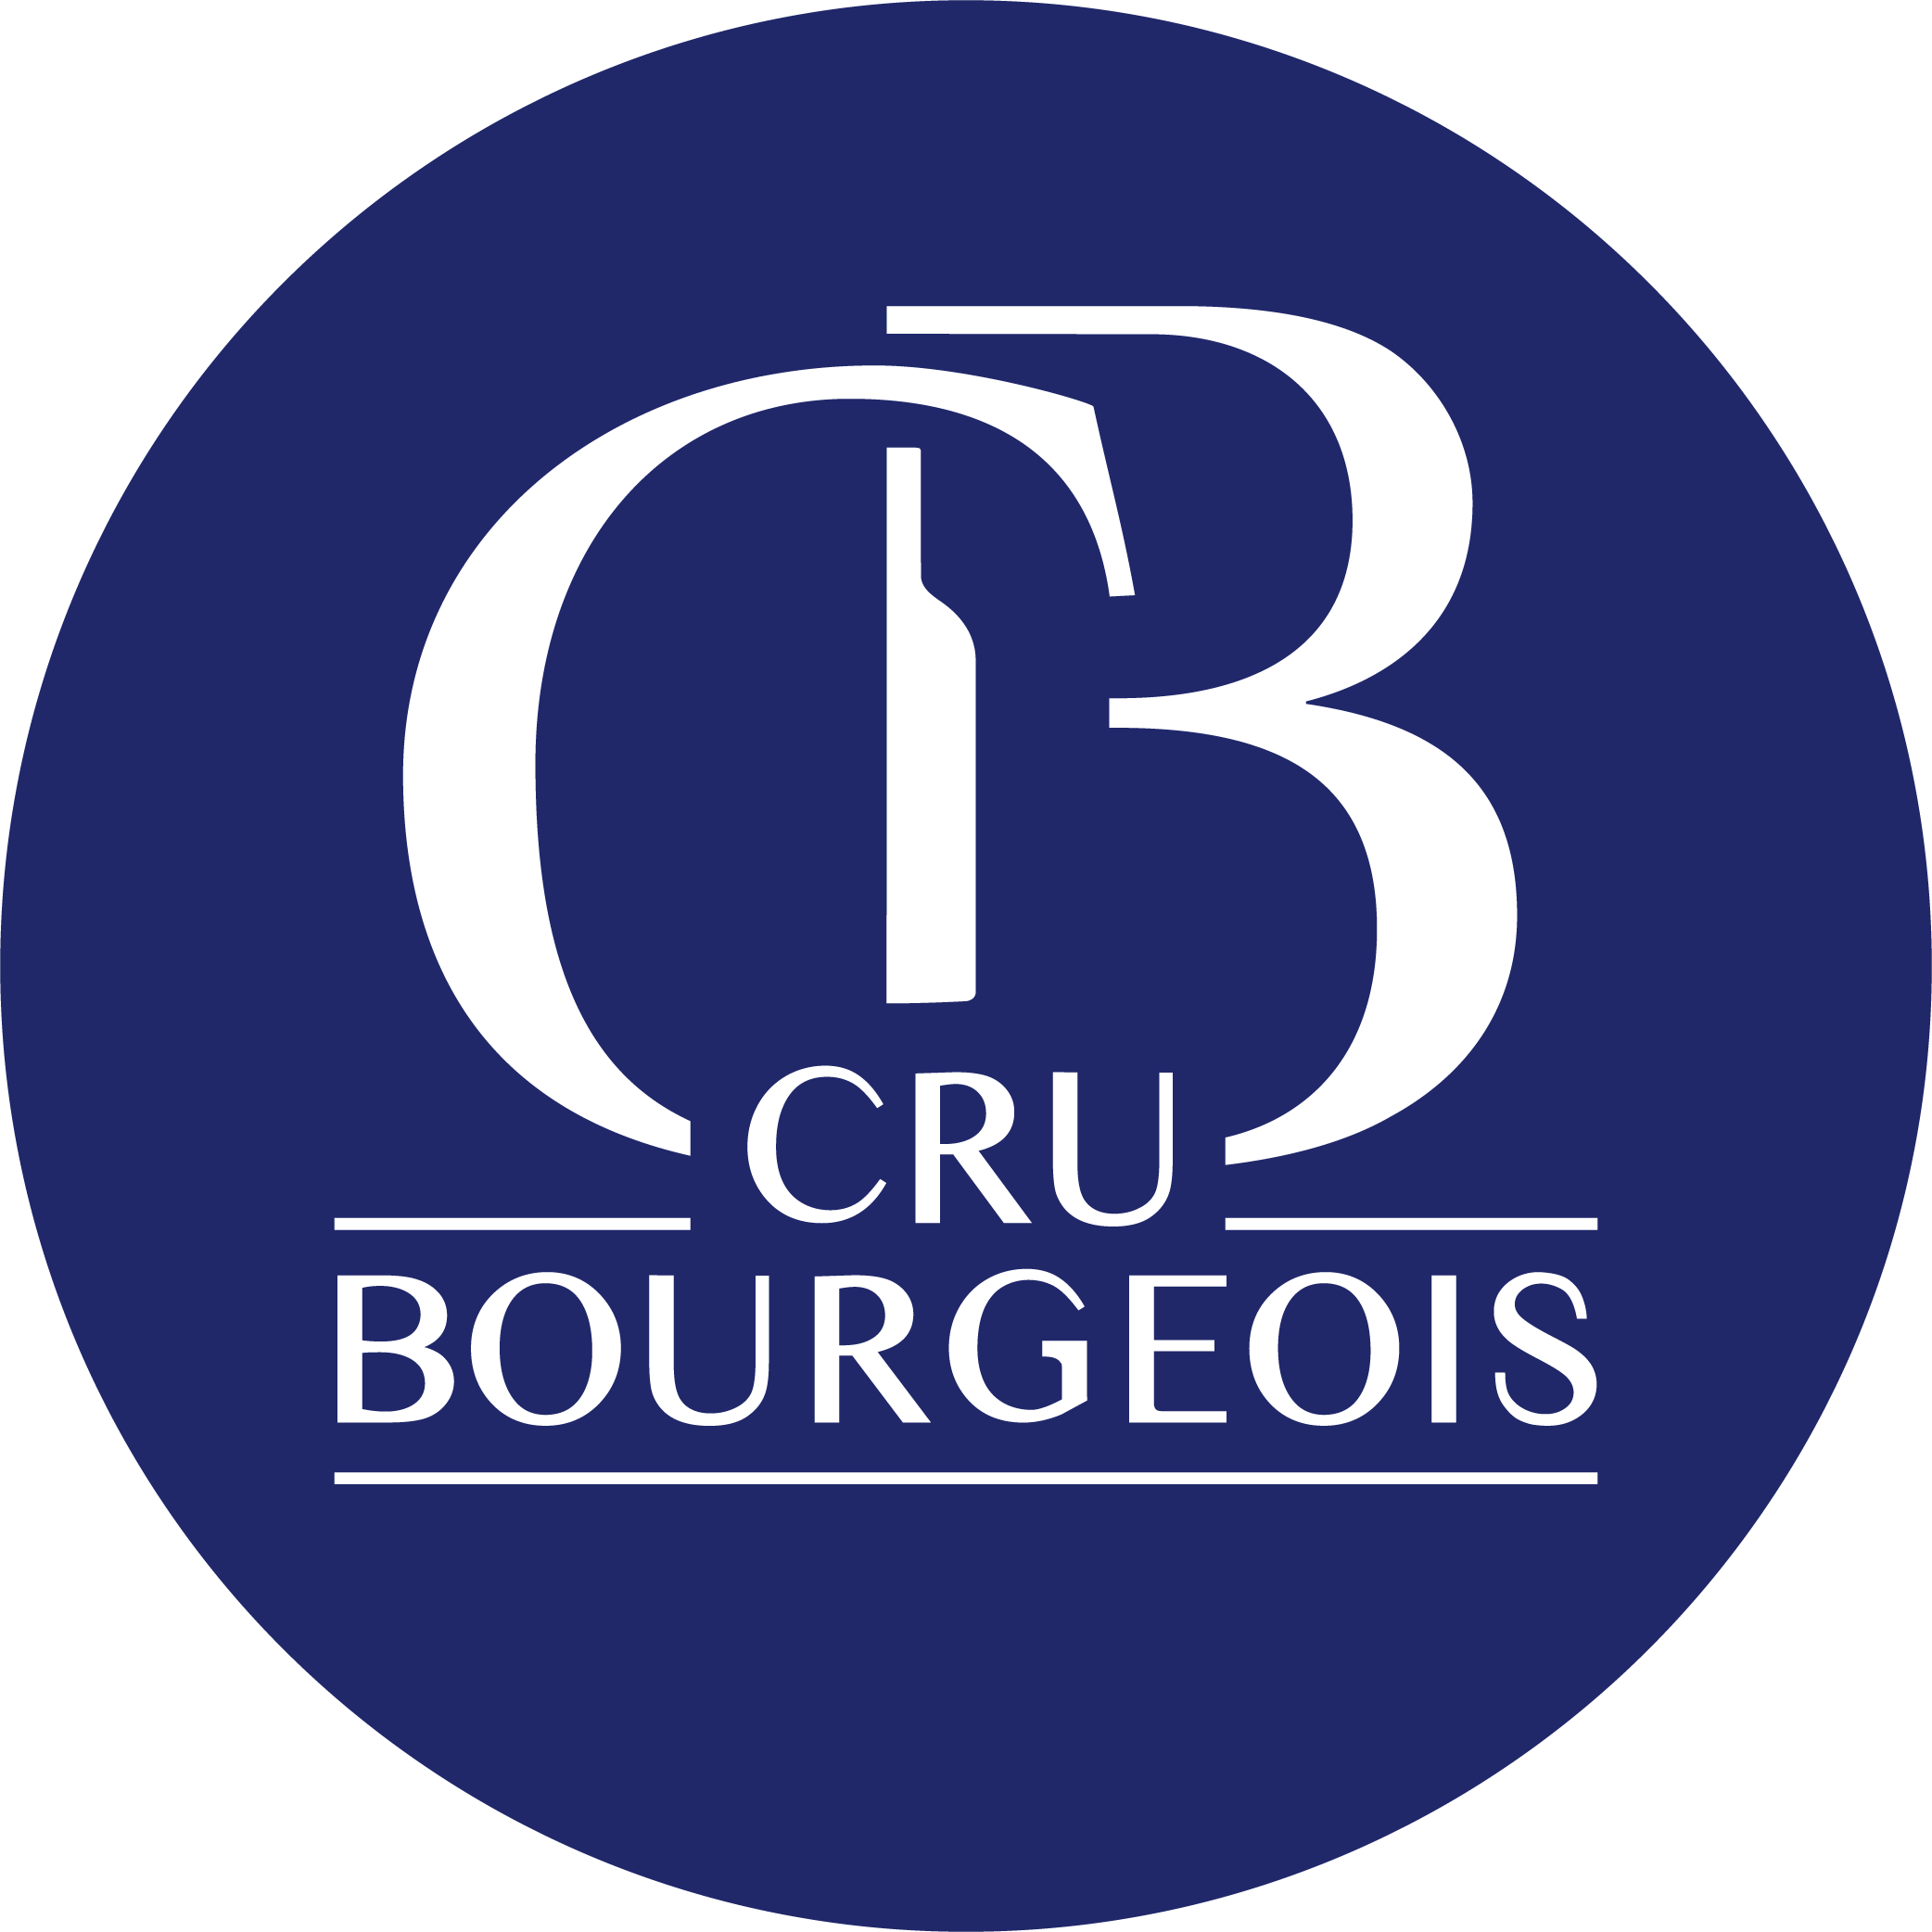 Crus bougeois